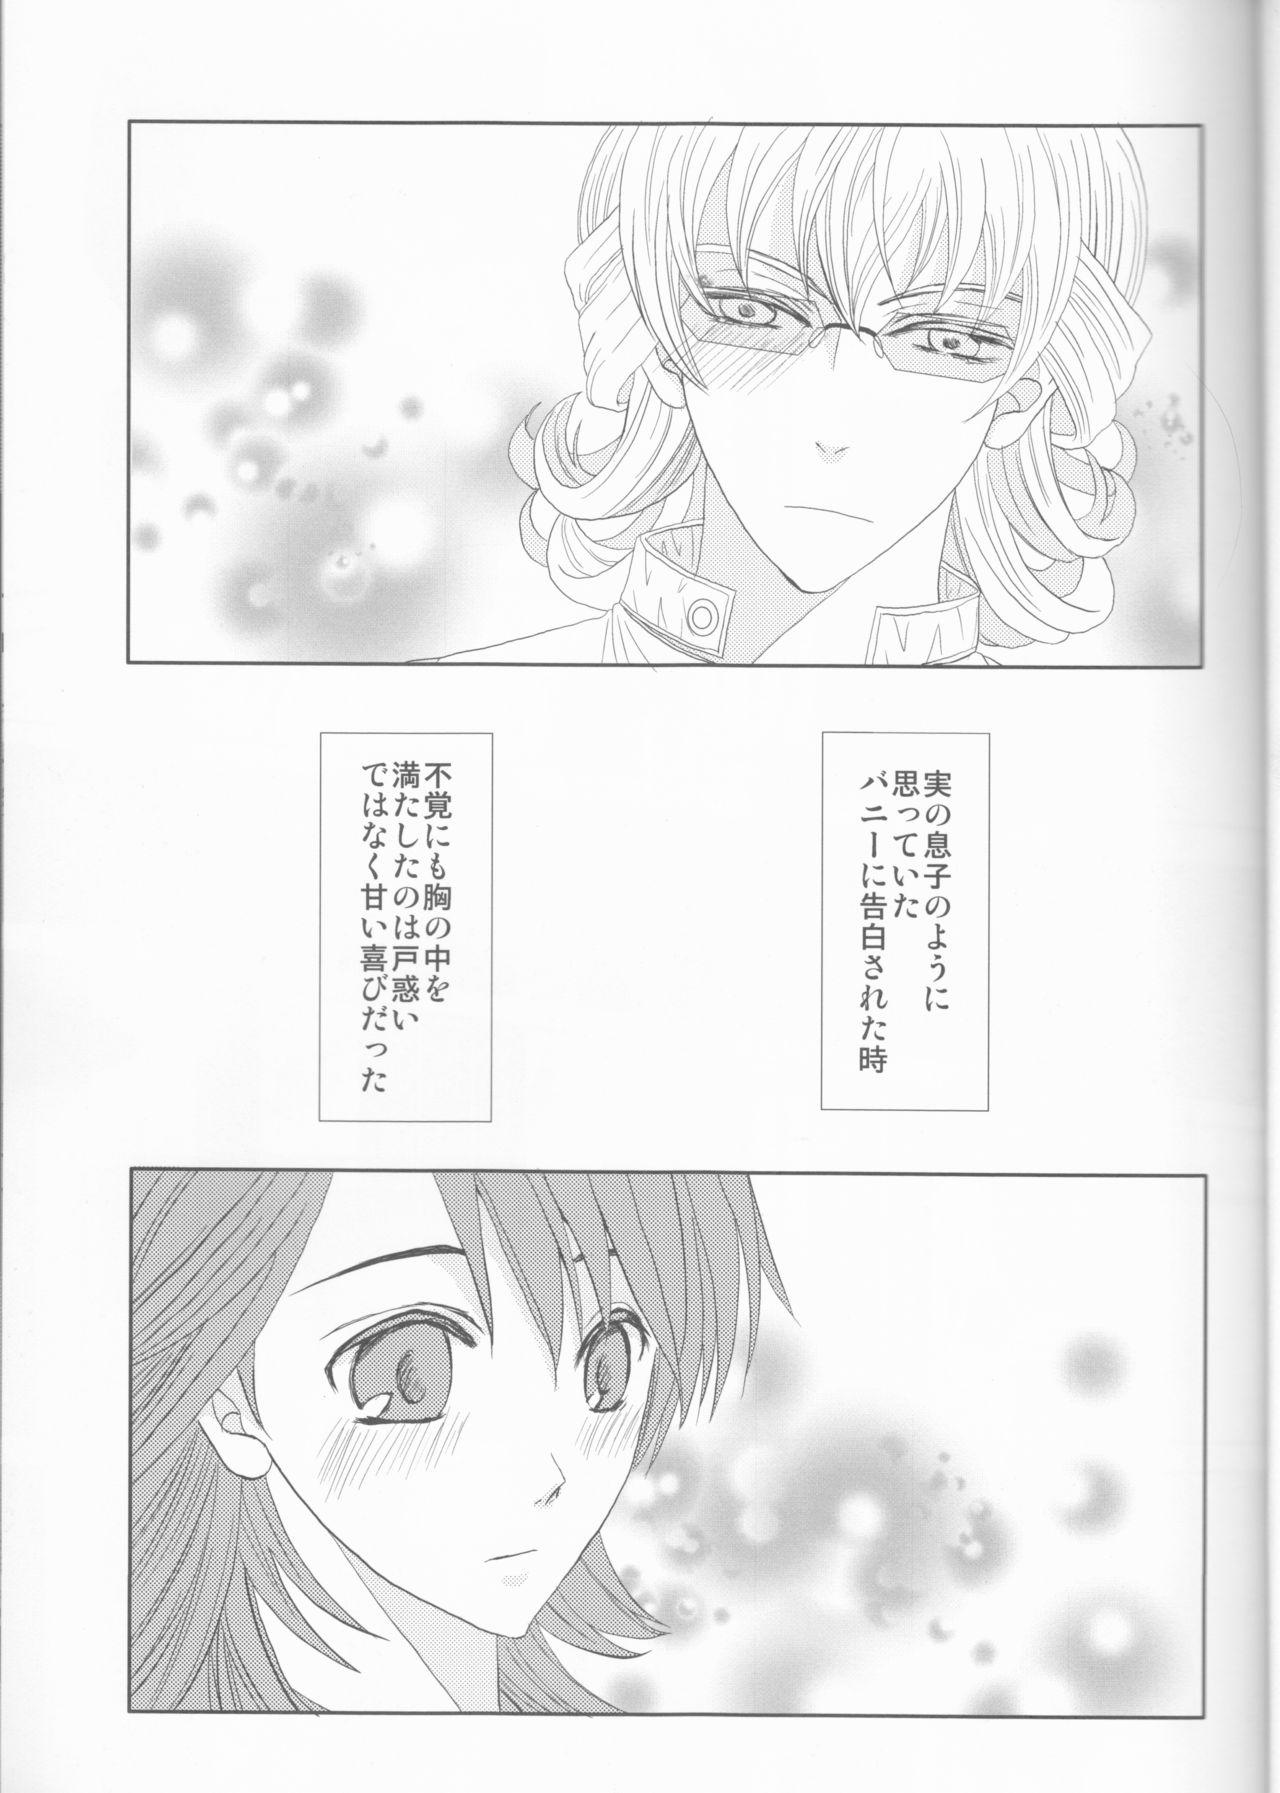 Adult Itsuka wa inaku naru kimi e - Tiger and bunny Bottom - Page 4